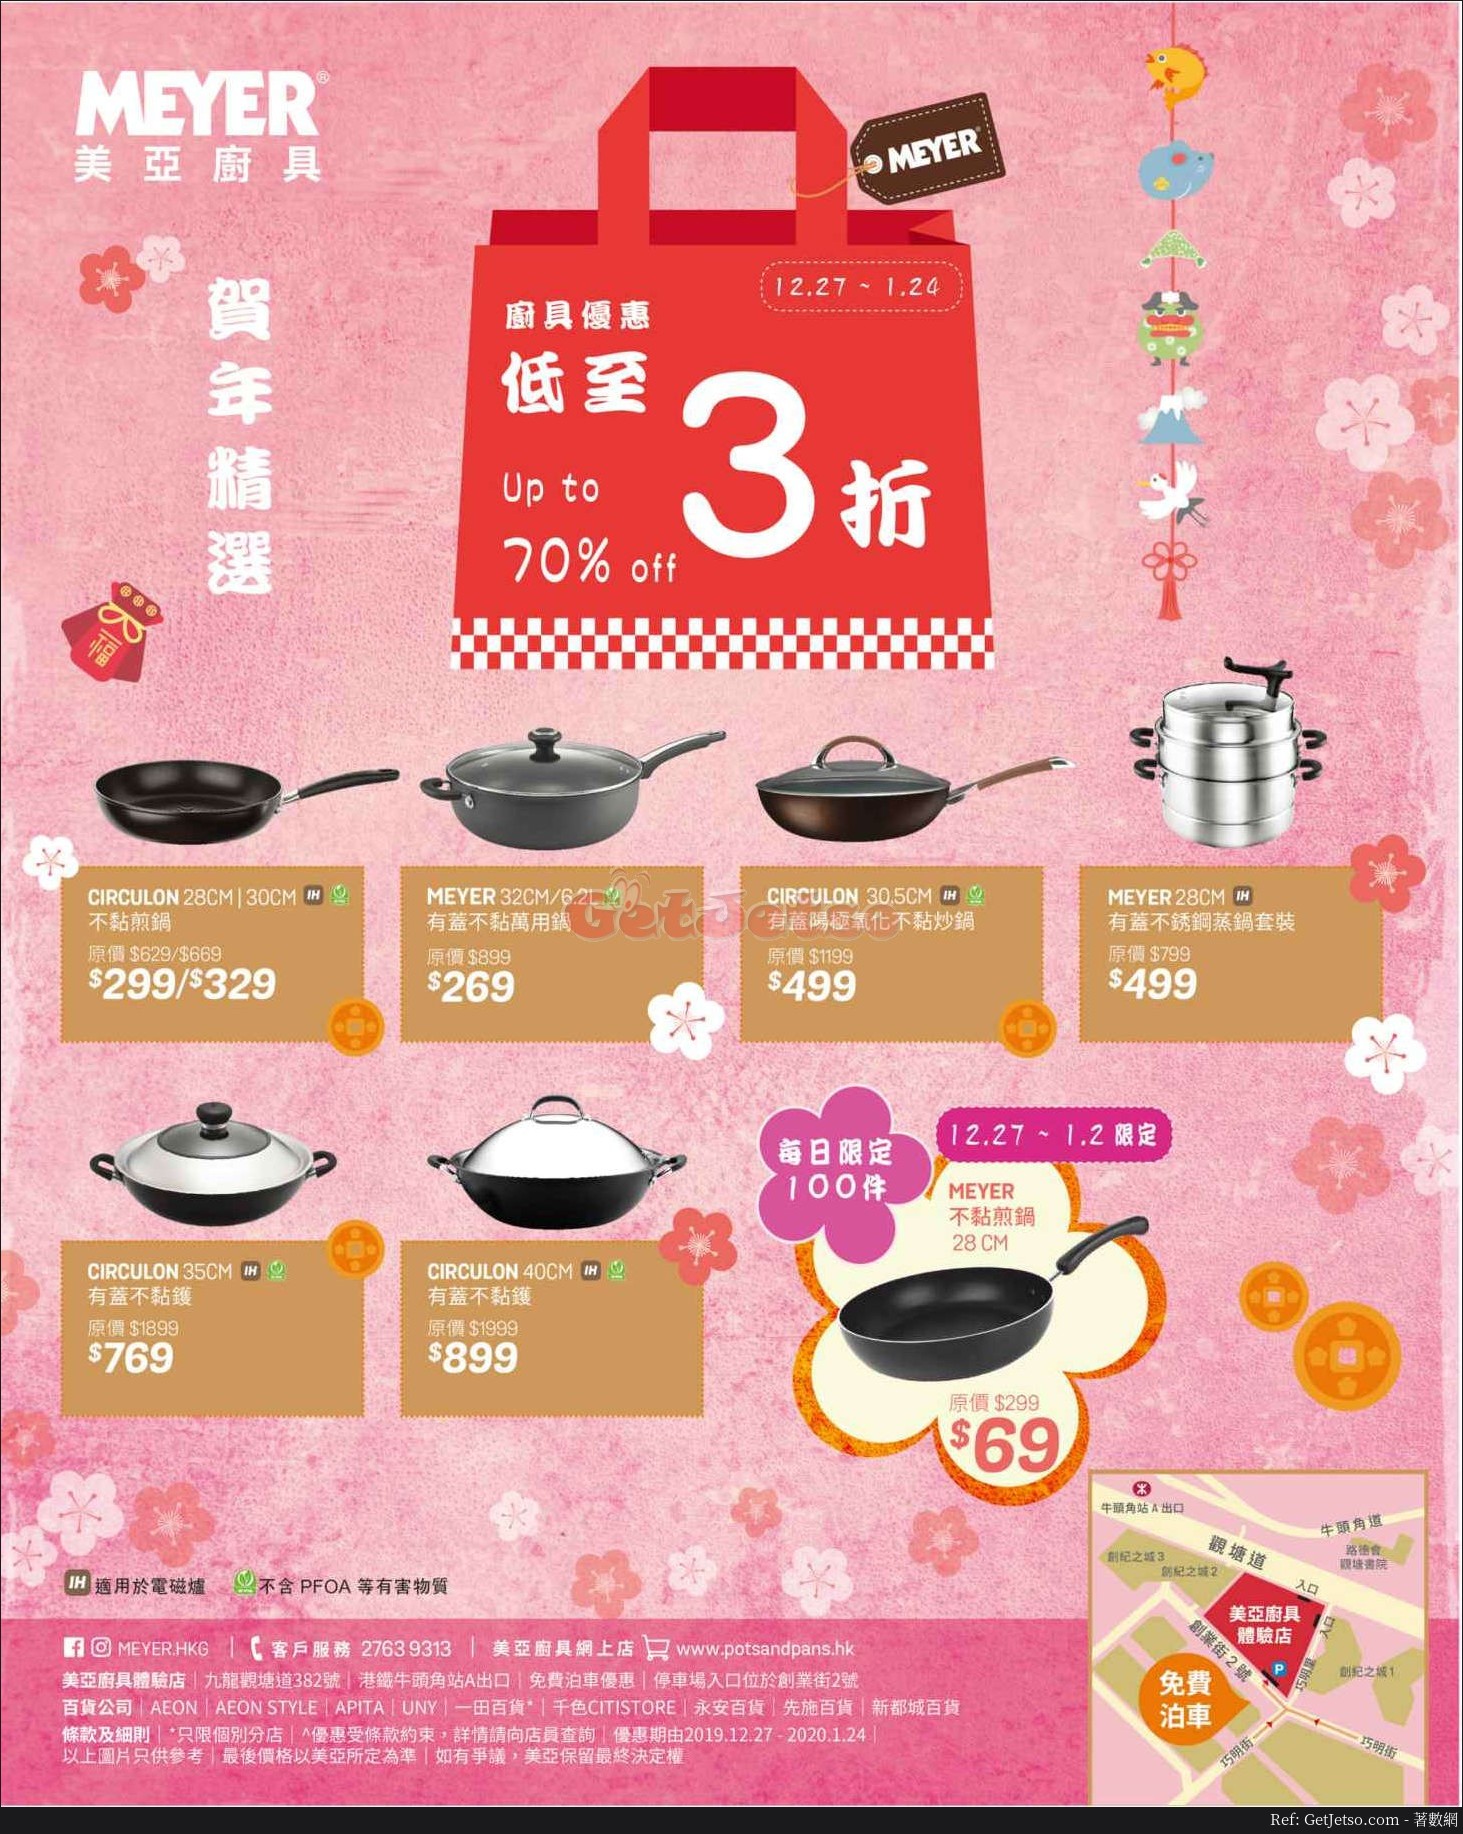 Meyer HK 美亞廚具低至3折減價優惠(至20年1月24日)圖片1